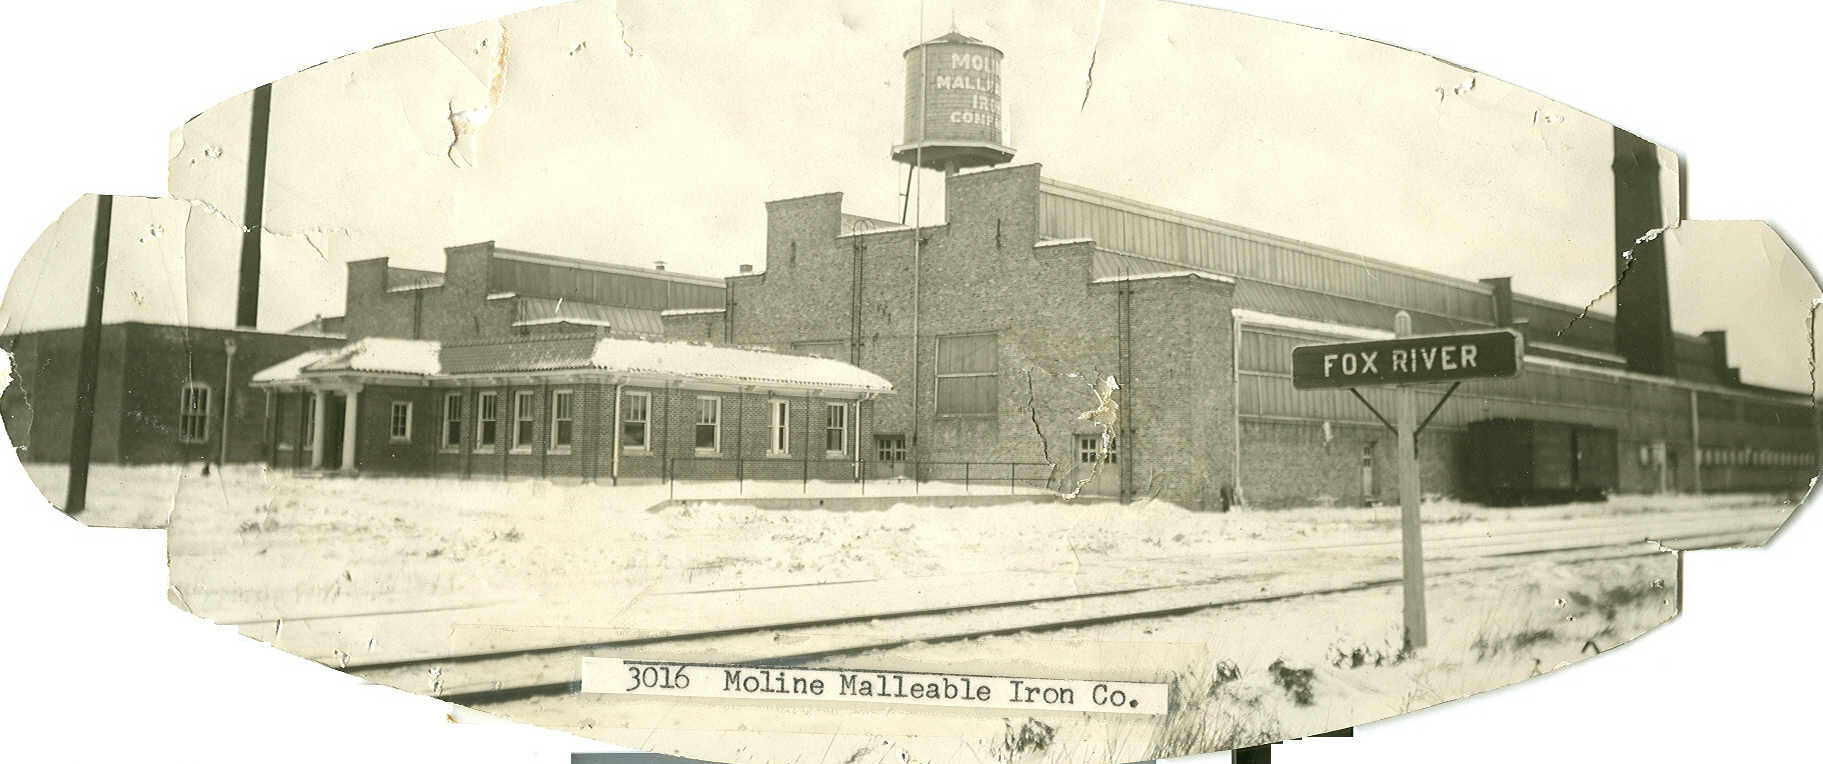 Moline Malleable Iron Company